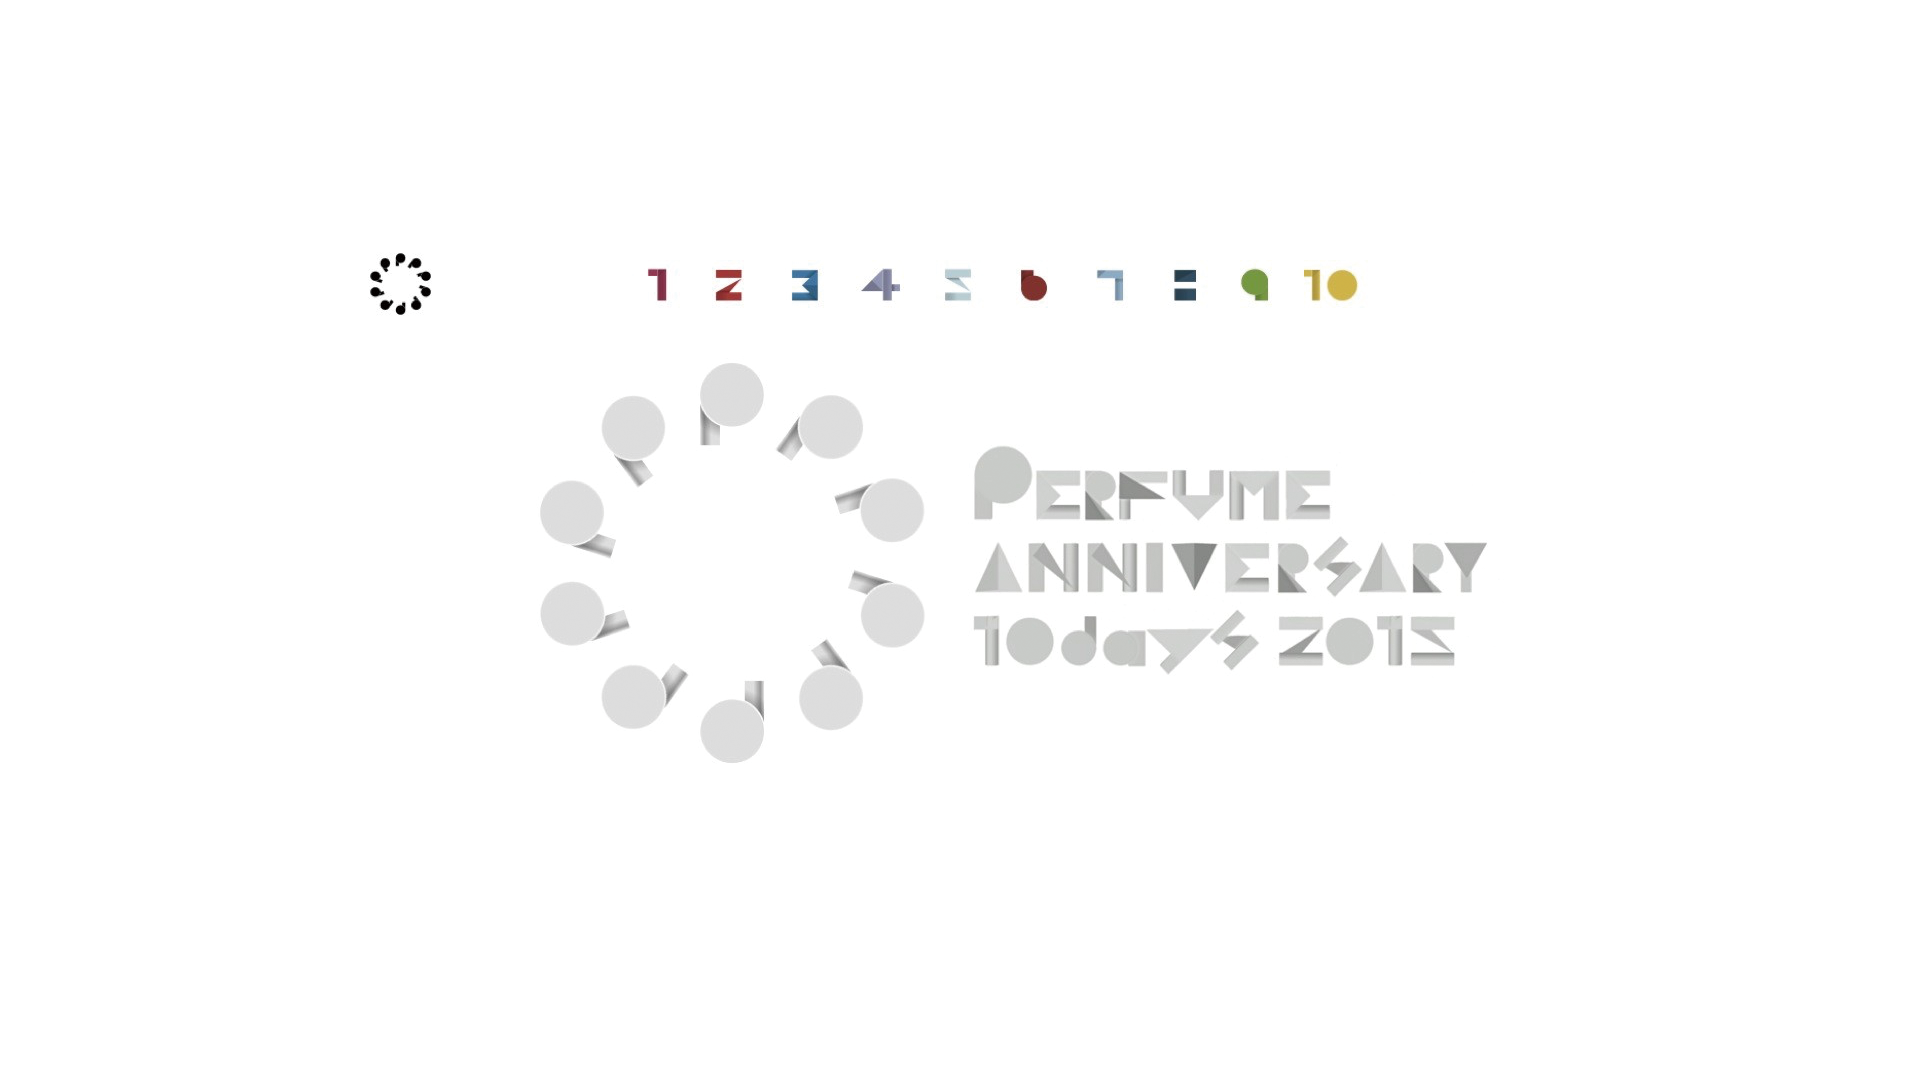 Perfume Anniversary 10days 2015 PPPPPPPPPP LIVE 3:5:6:9 /LOGO